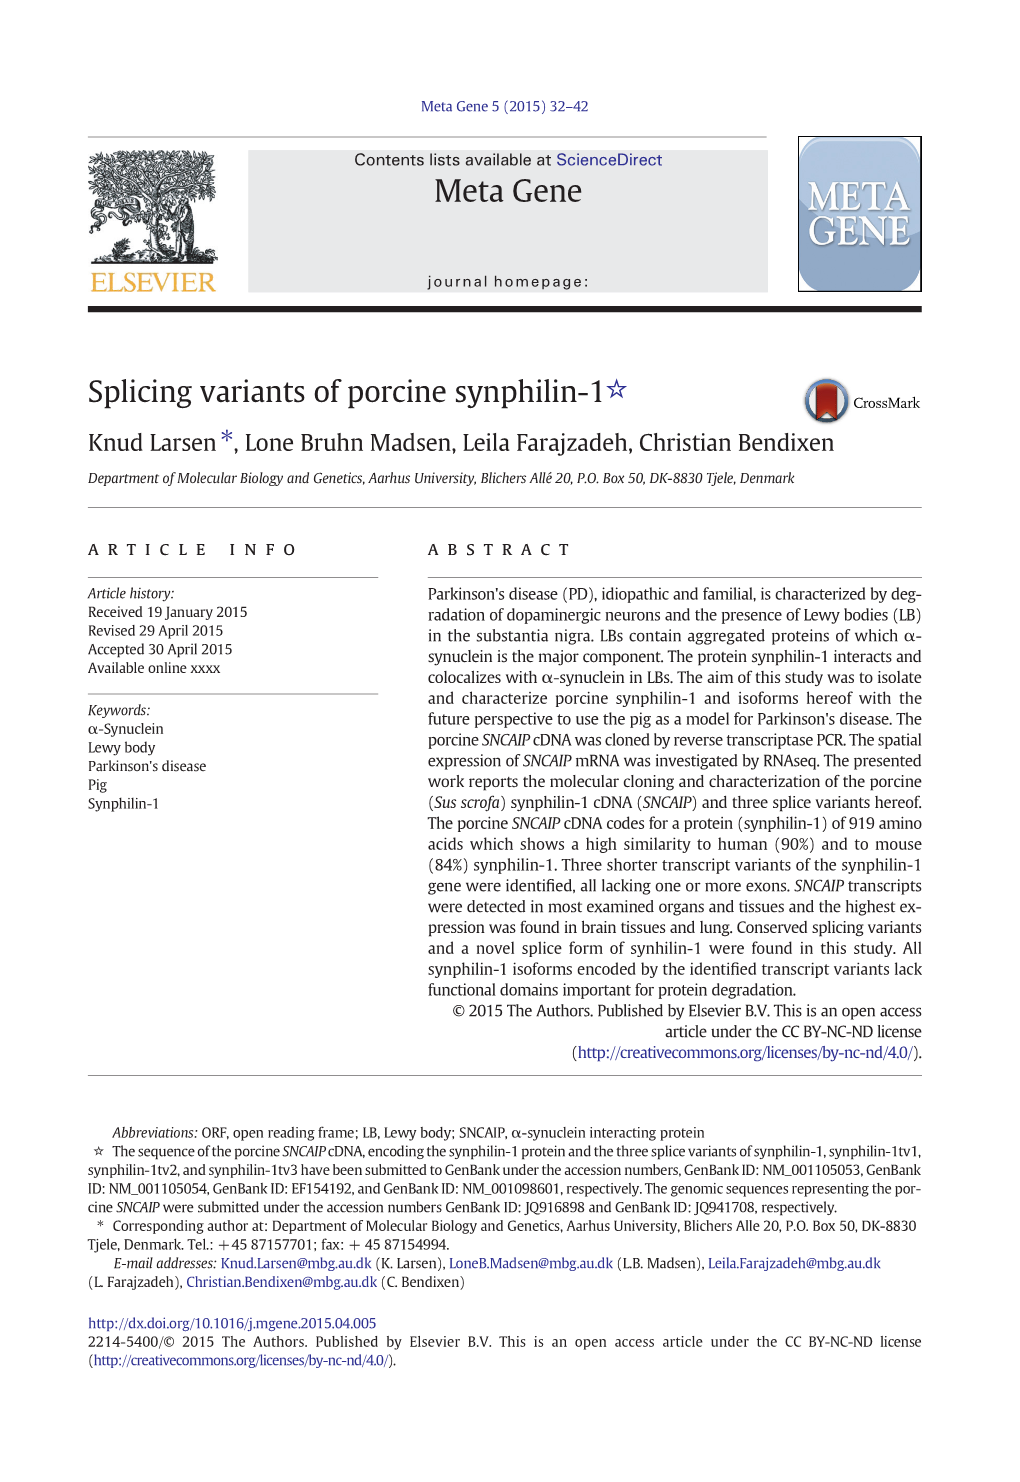 Splicing Variants of Porcine Synphilin-1☆